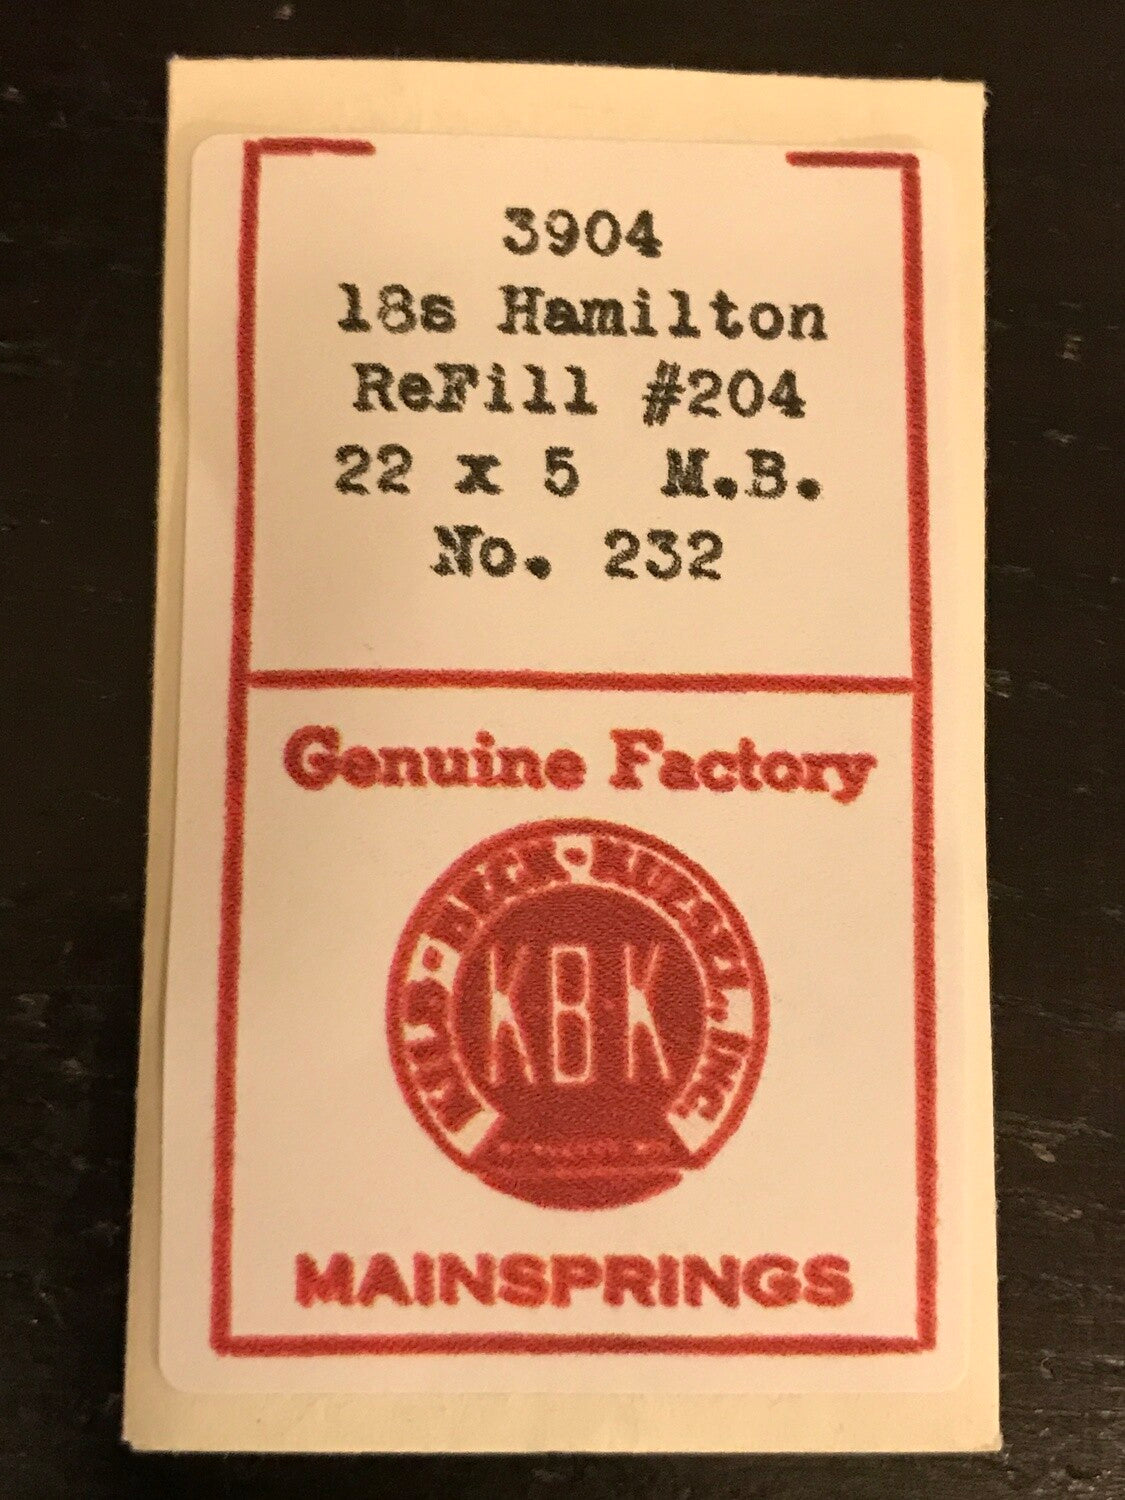 KBK Mainspring #3904 for Hamilton 18s Factory No. 232 - Steel